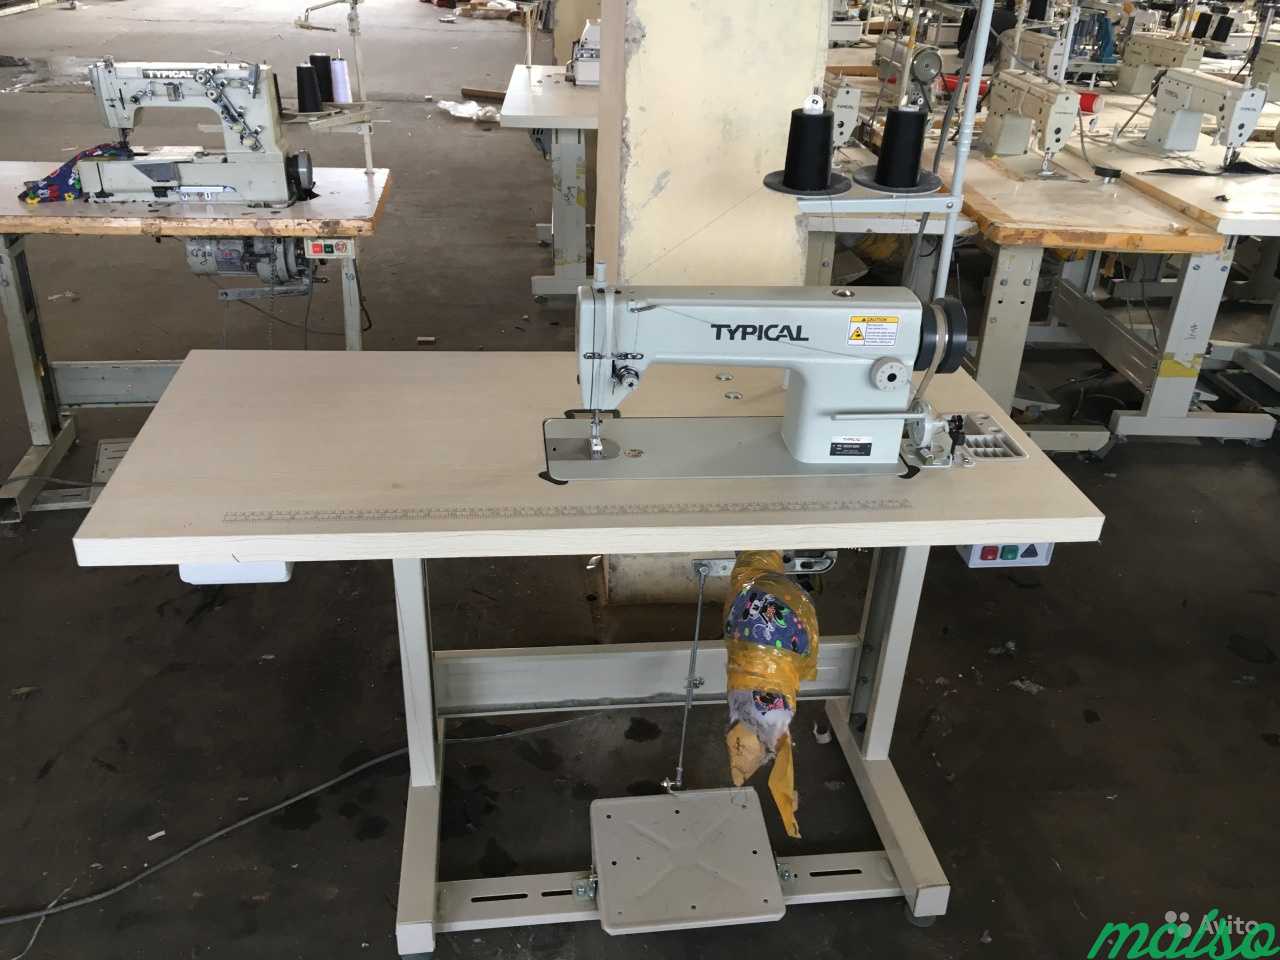 Typical швейная машина gc6150h